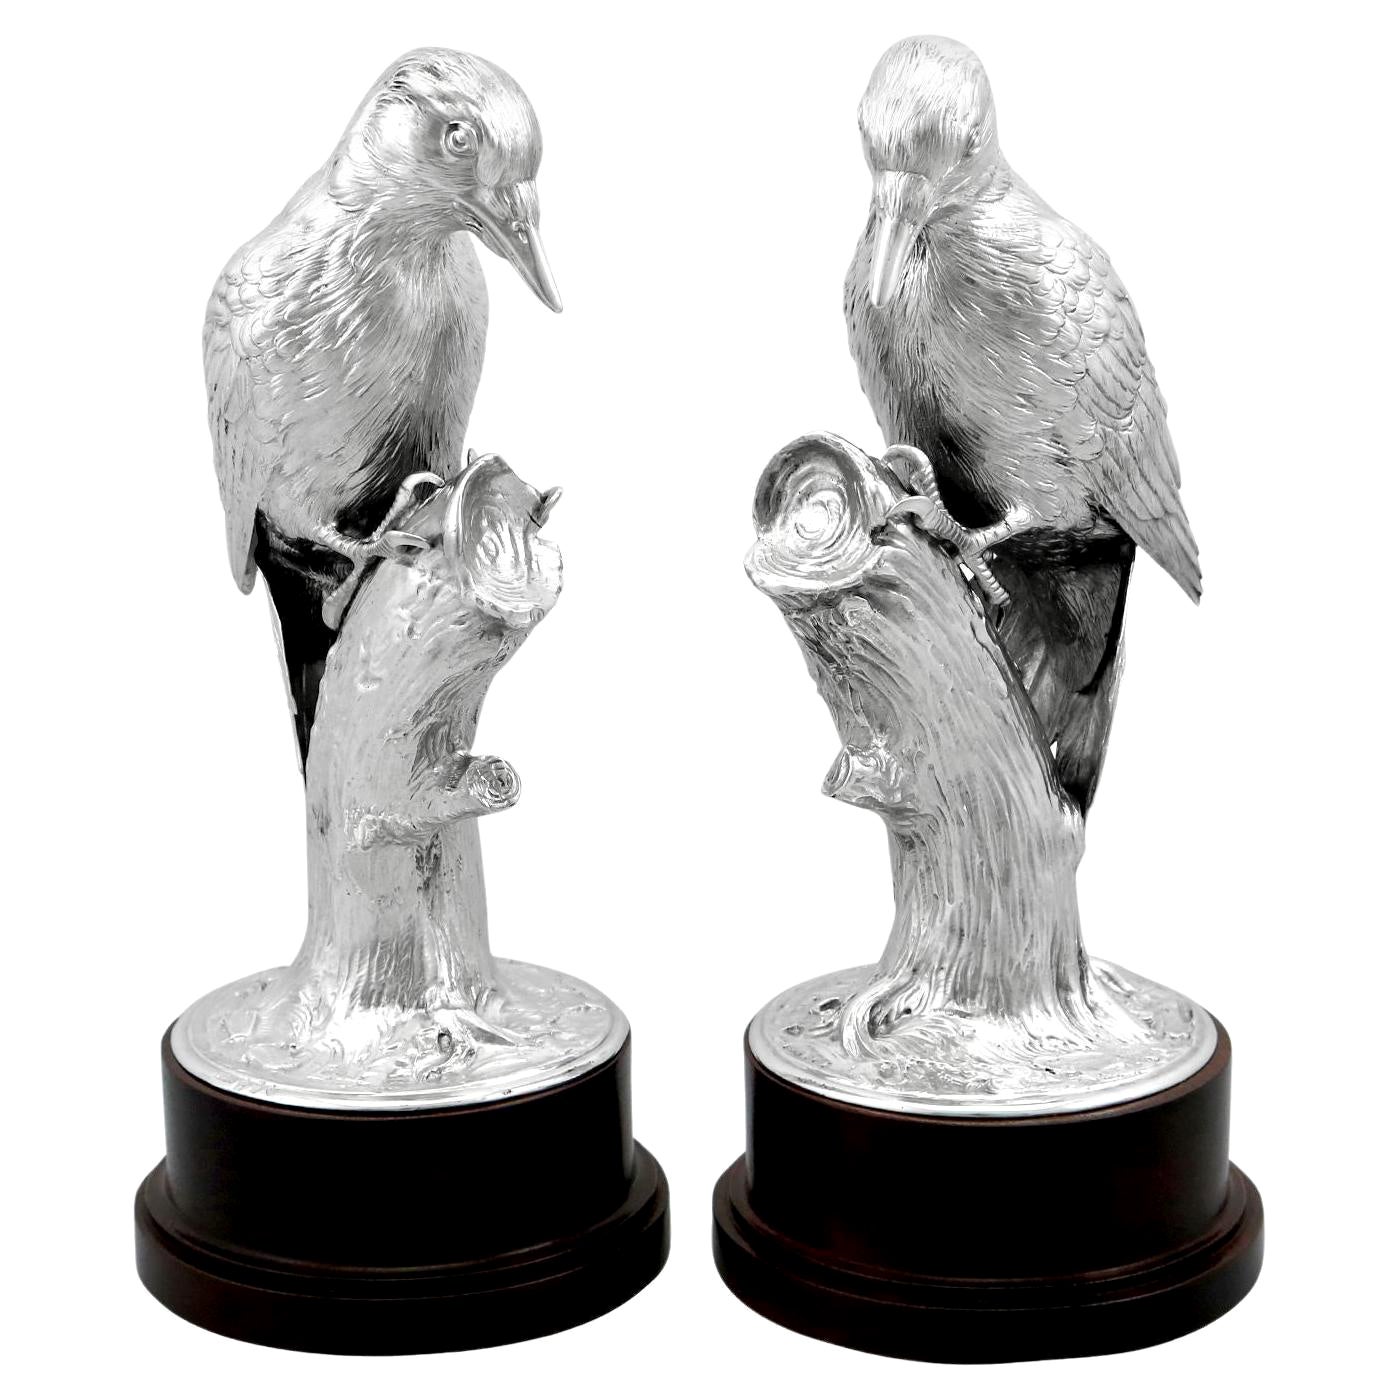 Antique German Sterling Silver Presentation / Table Bird Ornaments